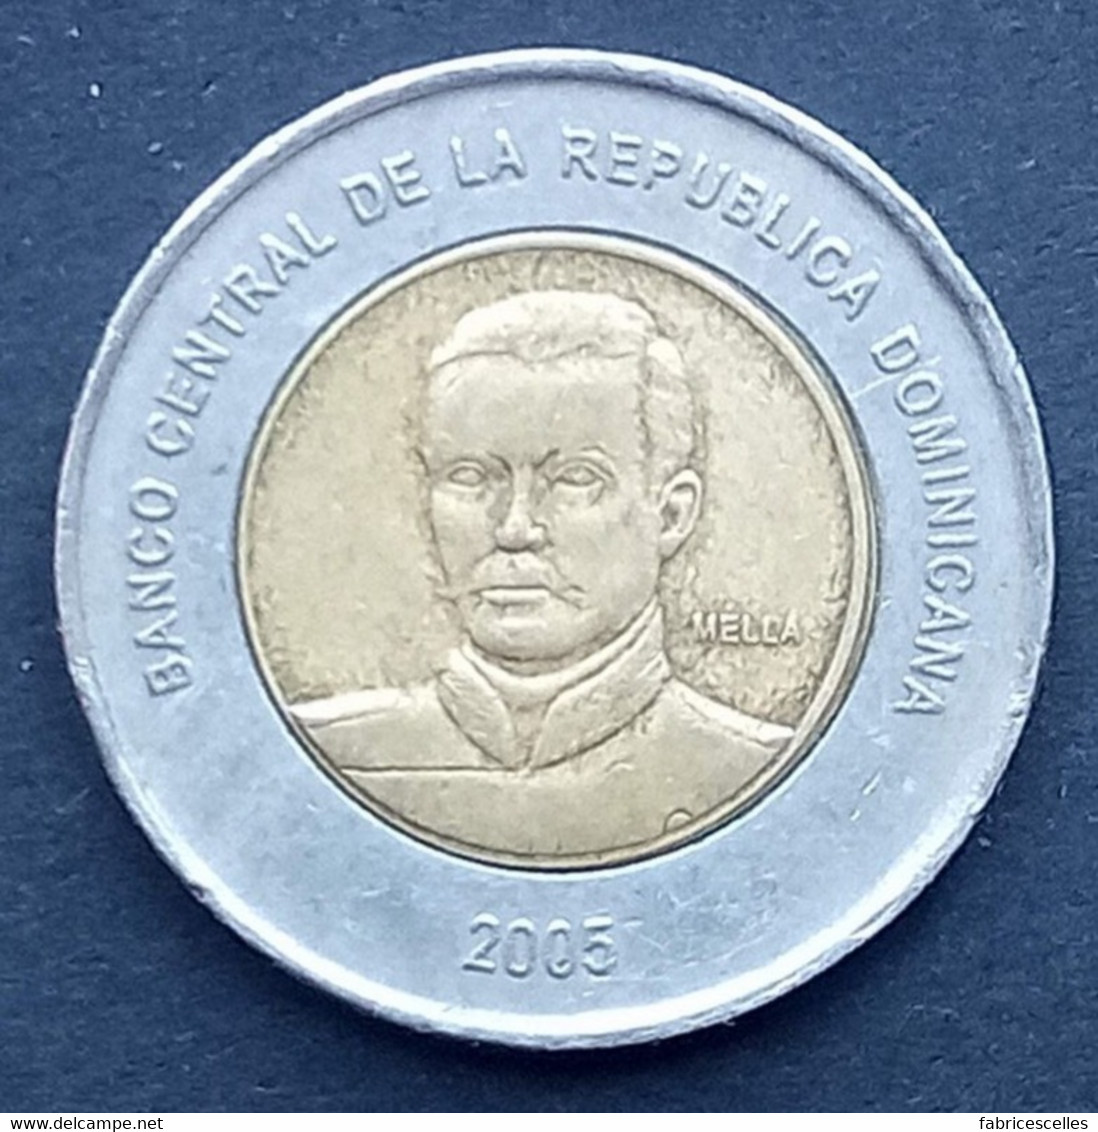 République Dominicaine - 10 Pesos 2005 - Dominikanische Rep.